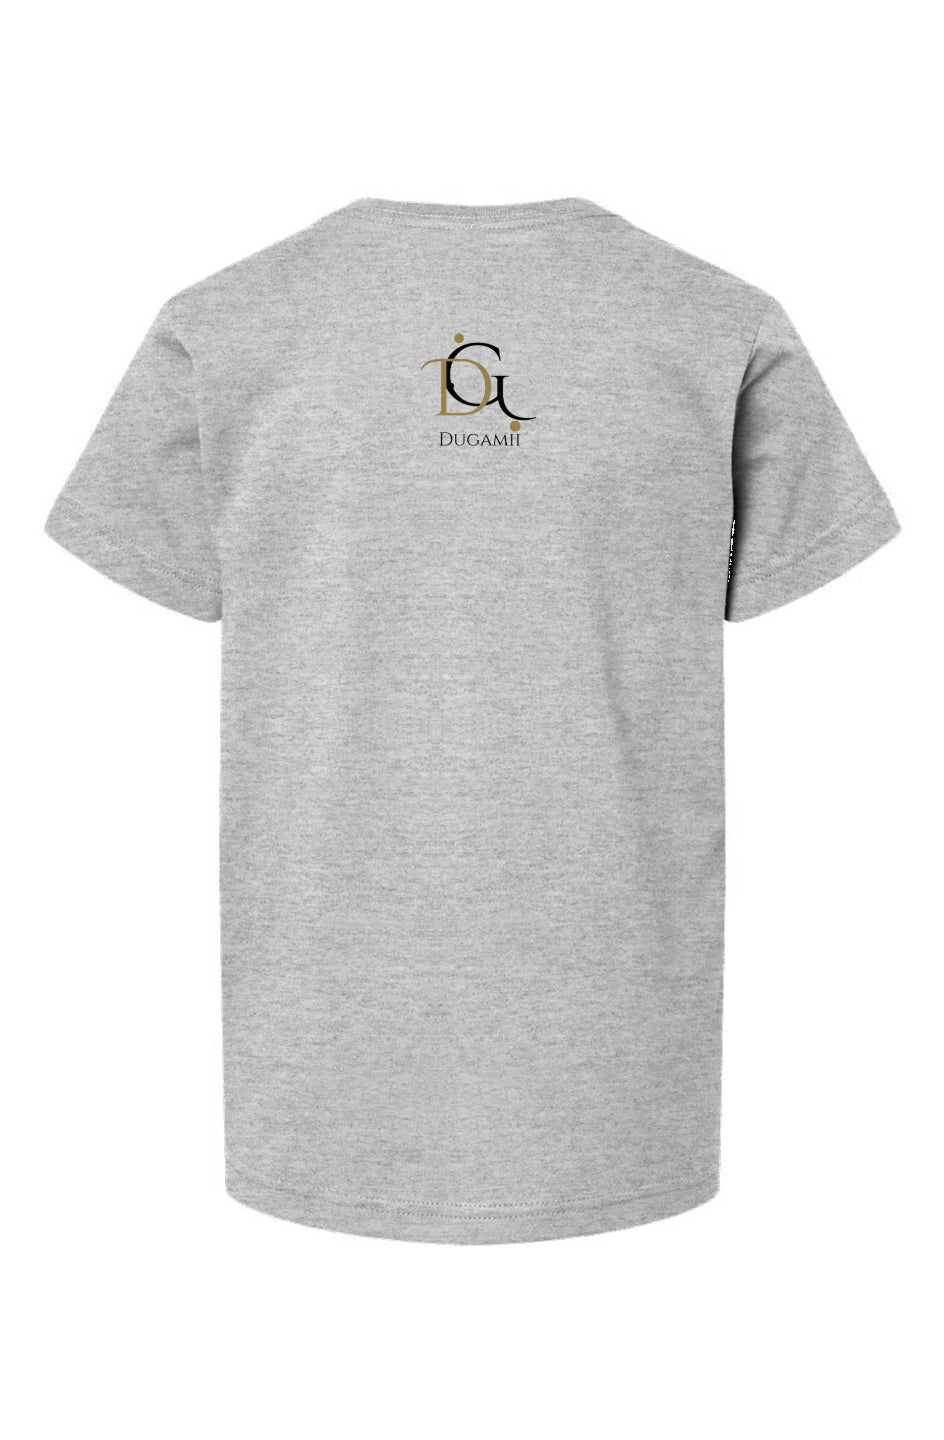 DuGamii Youth Logo Print Grey T-Shirt